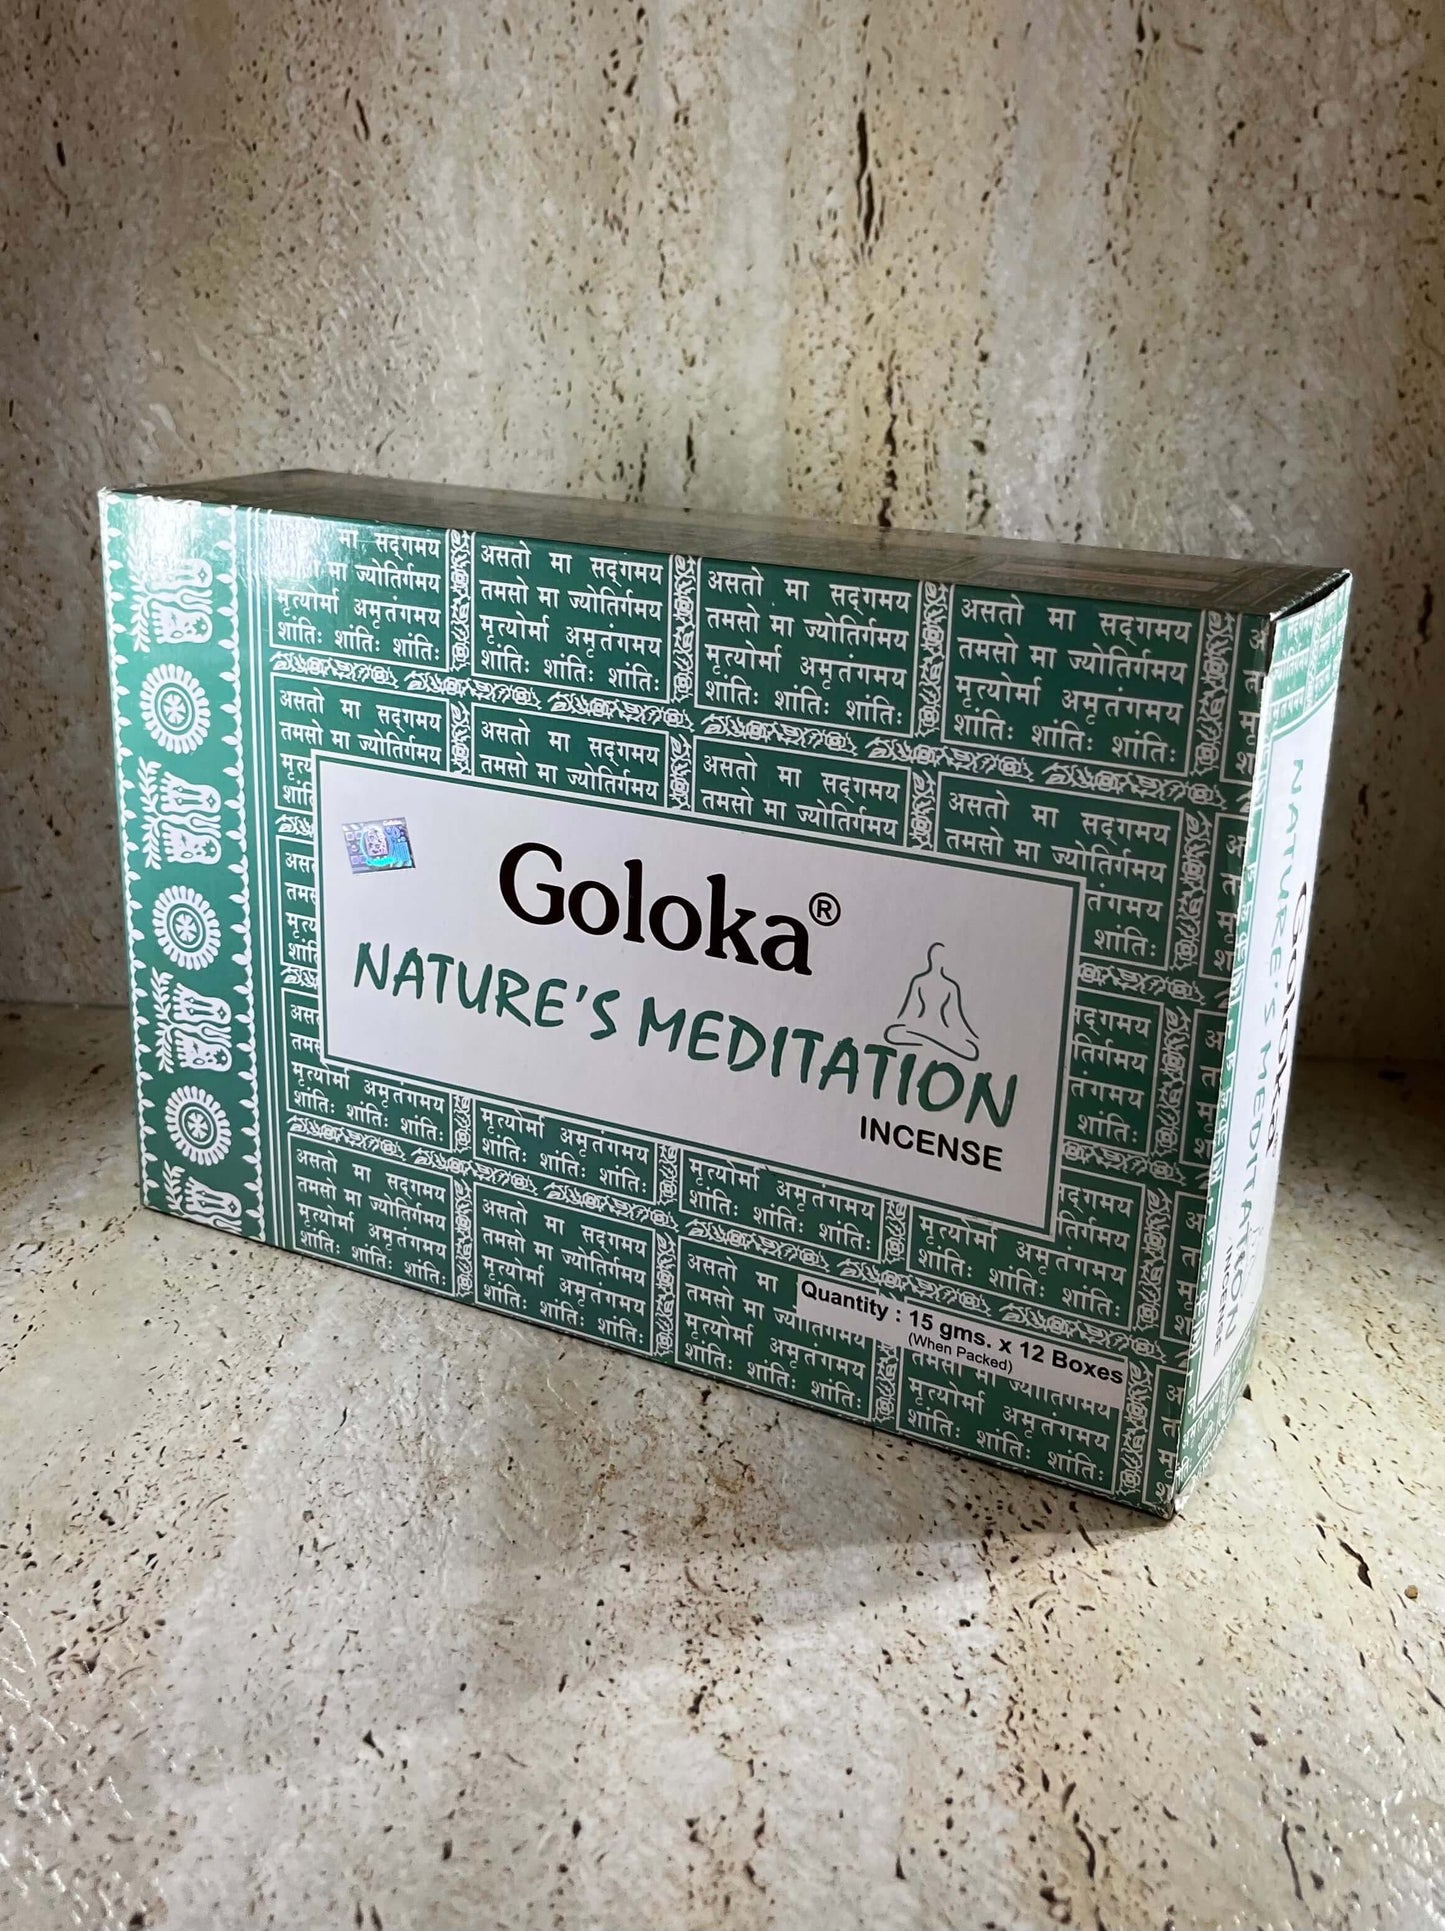 Goloka Nature's Meditation incense